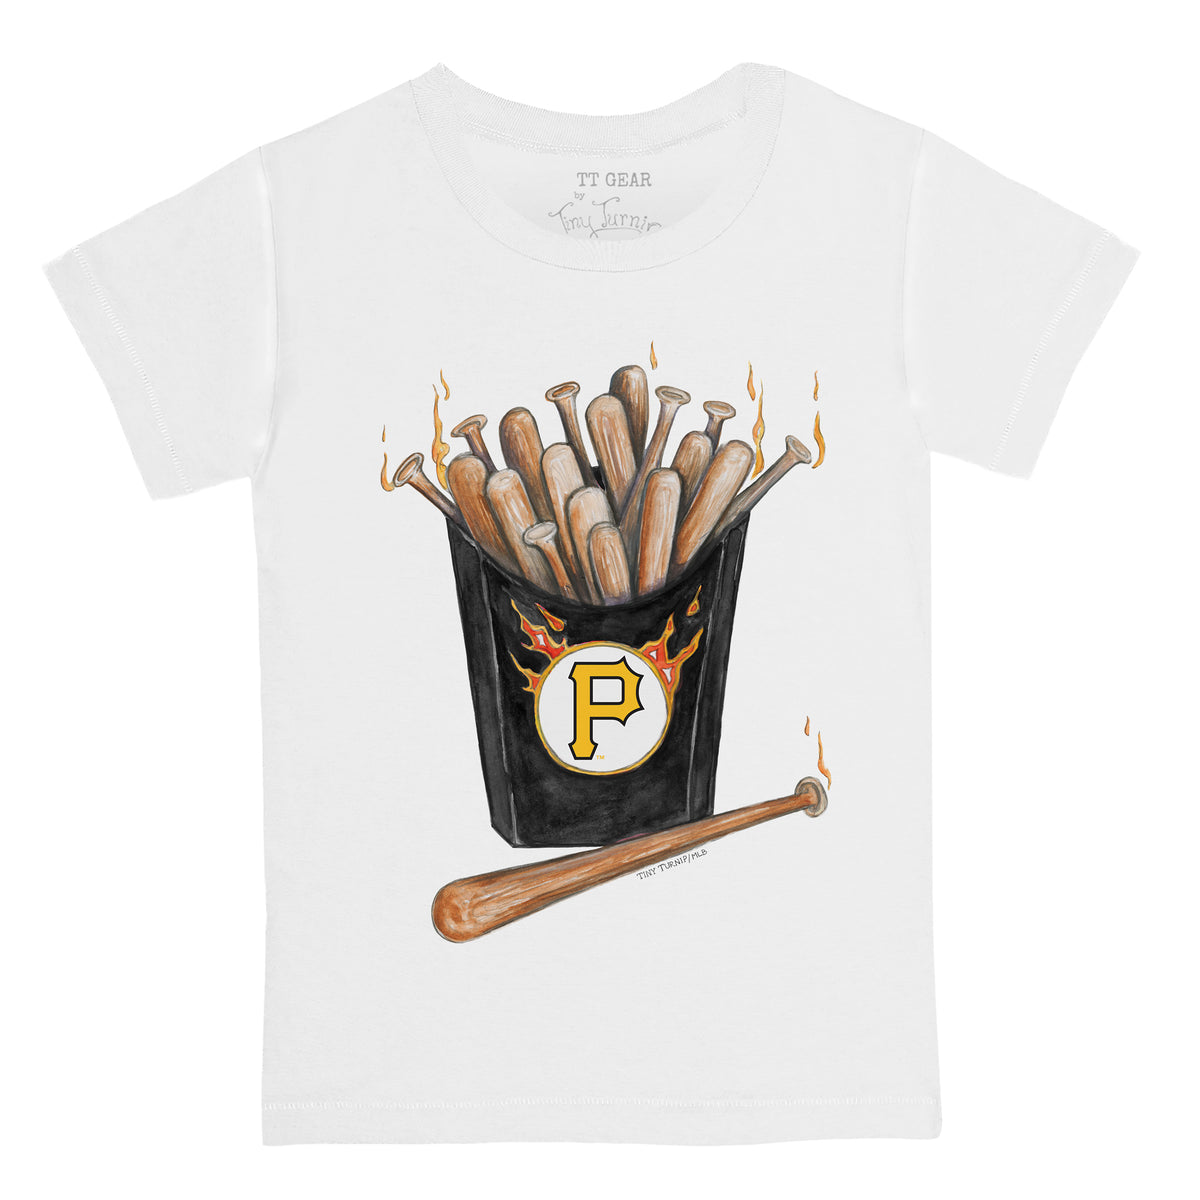 Pittsburgh Pirates Hot Bats Tee Shirt